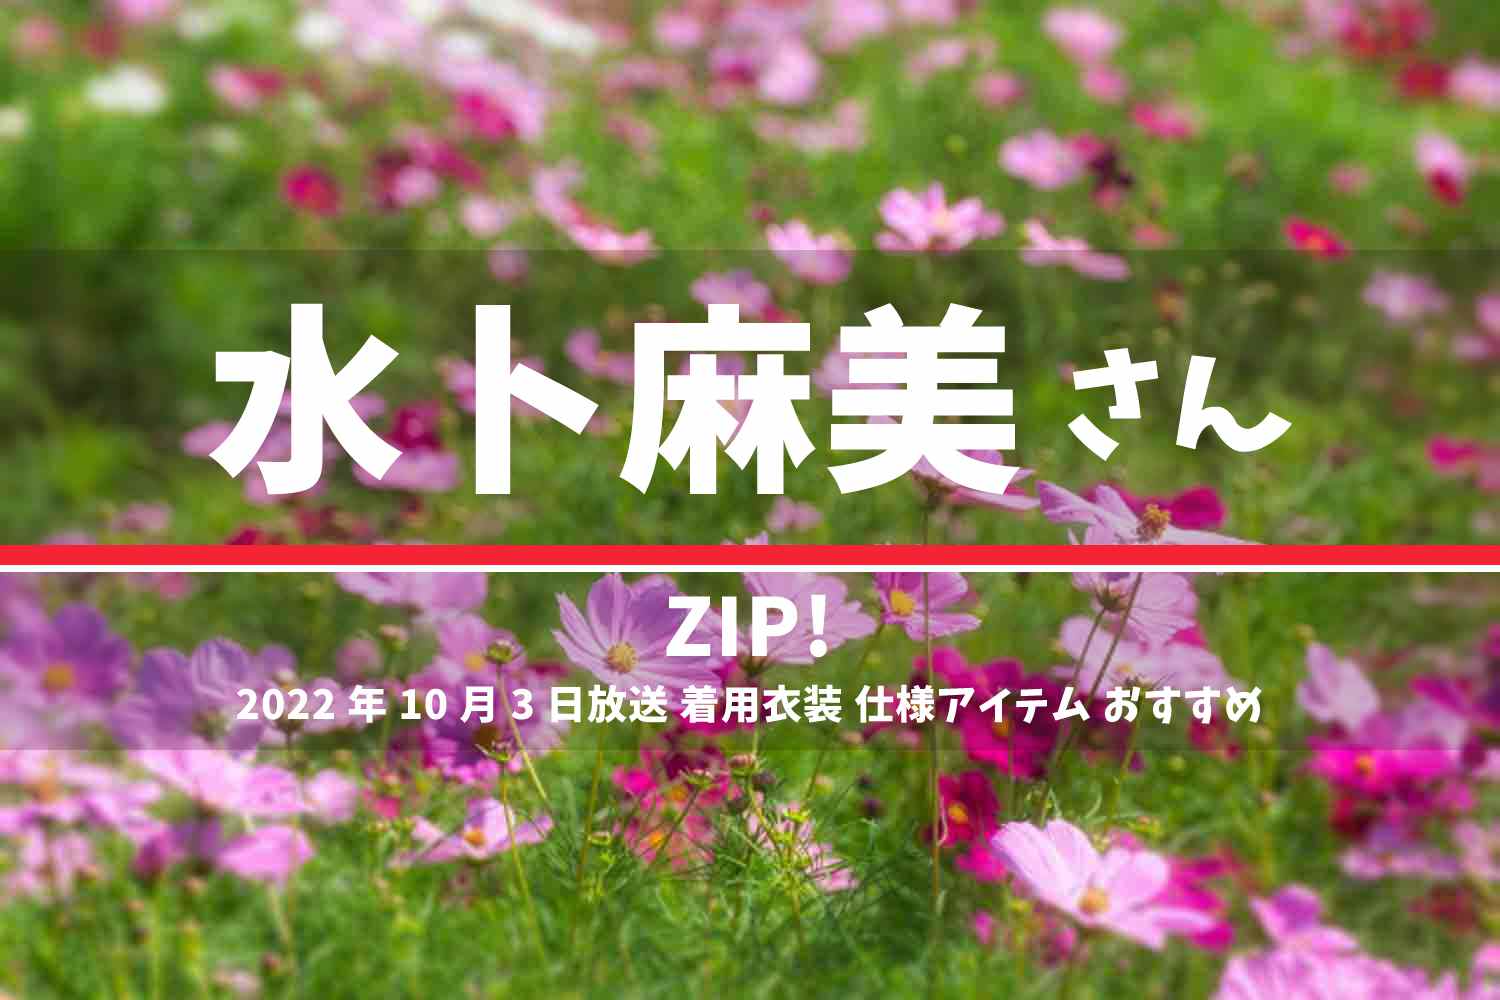 ZIP! 水卜麻美さん 番組 衣装 2022年10月3日放送